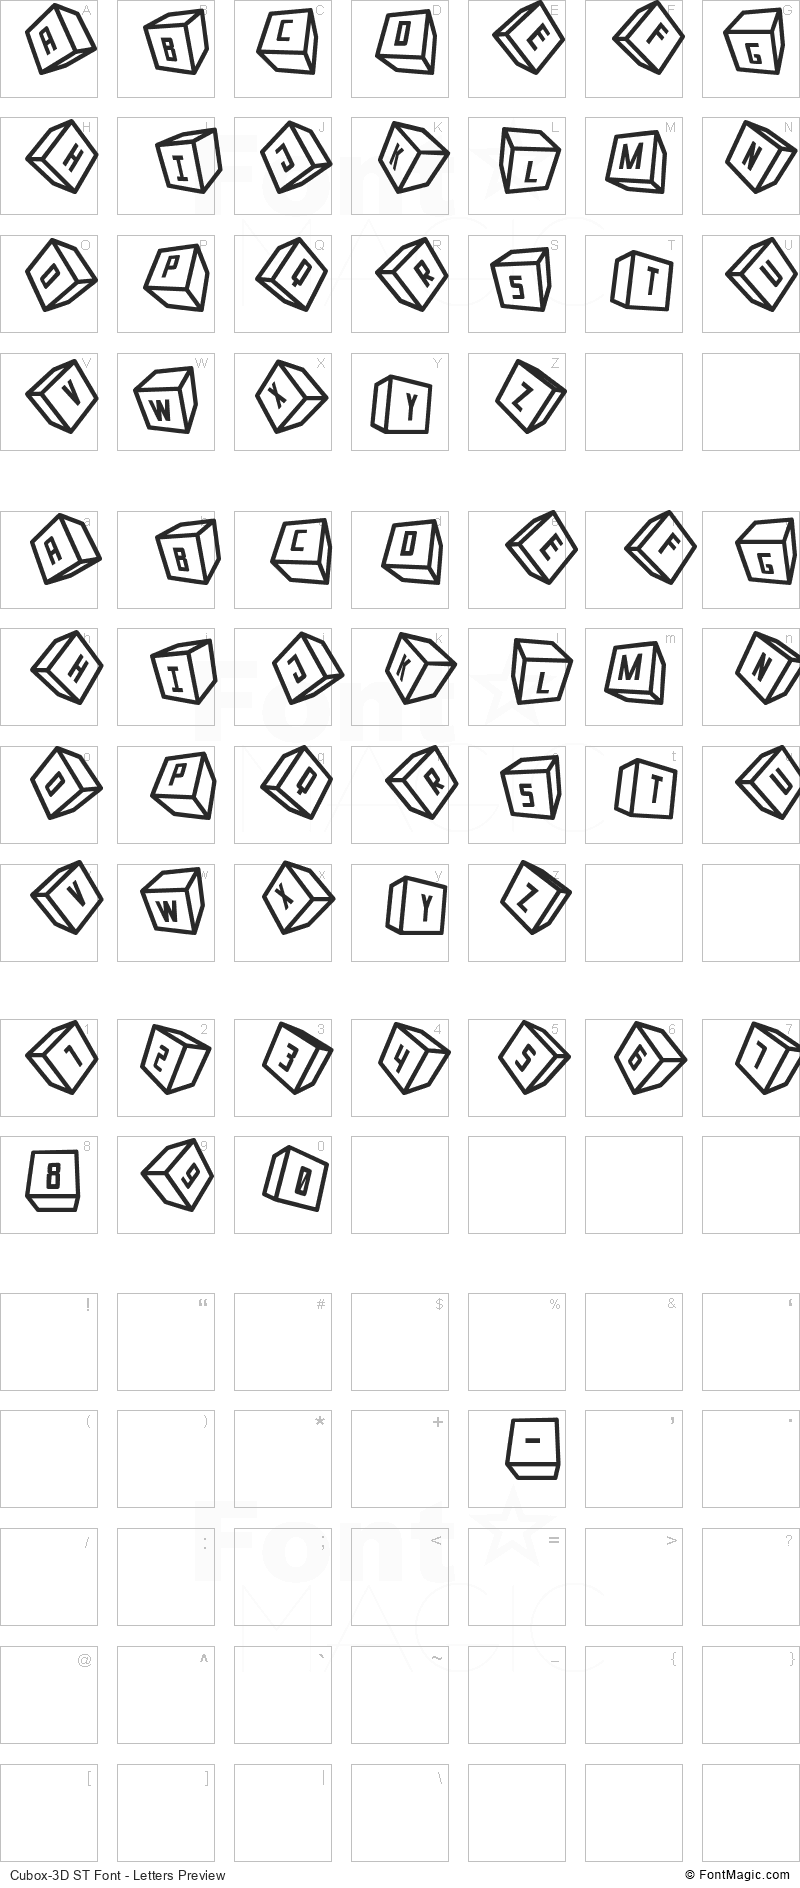 Cubox-3D ST Font - All Latters Preview Chart